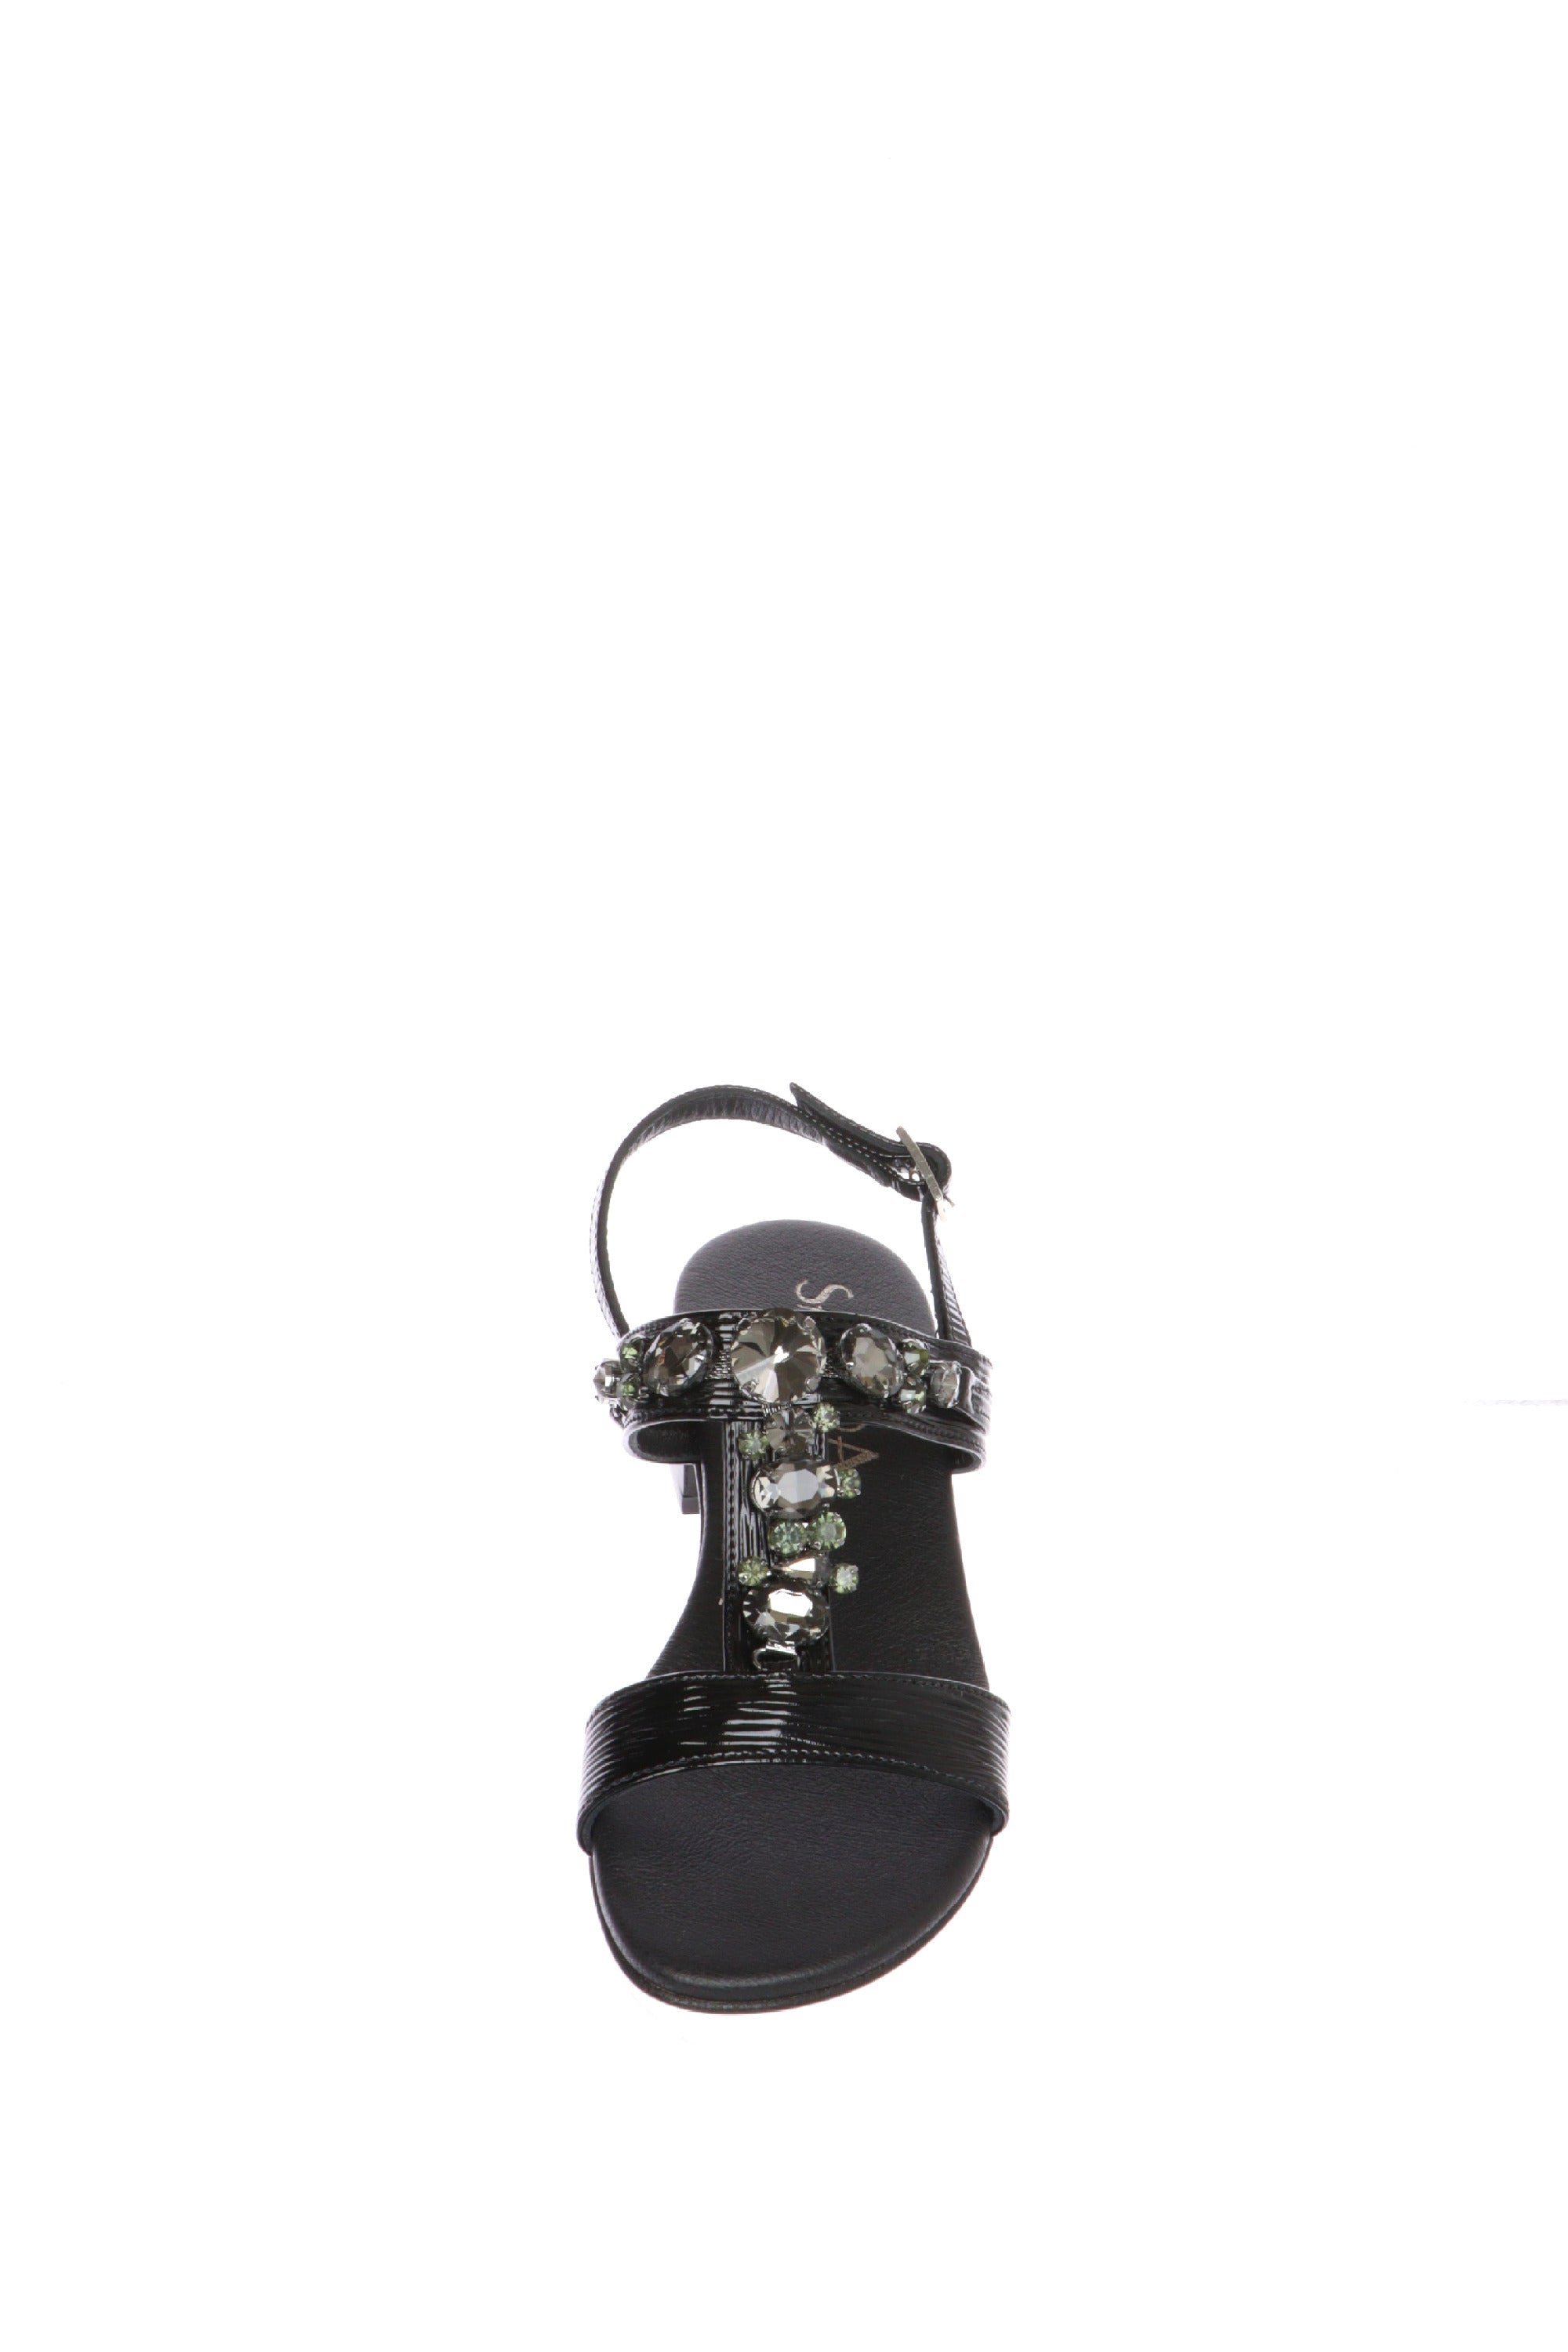 Sandalo nero elegante tacco basso n 33 34 donna Sandra Calzature